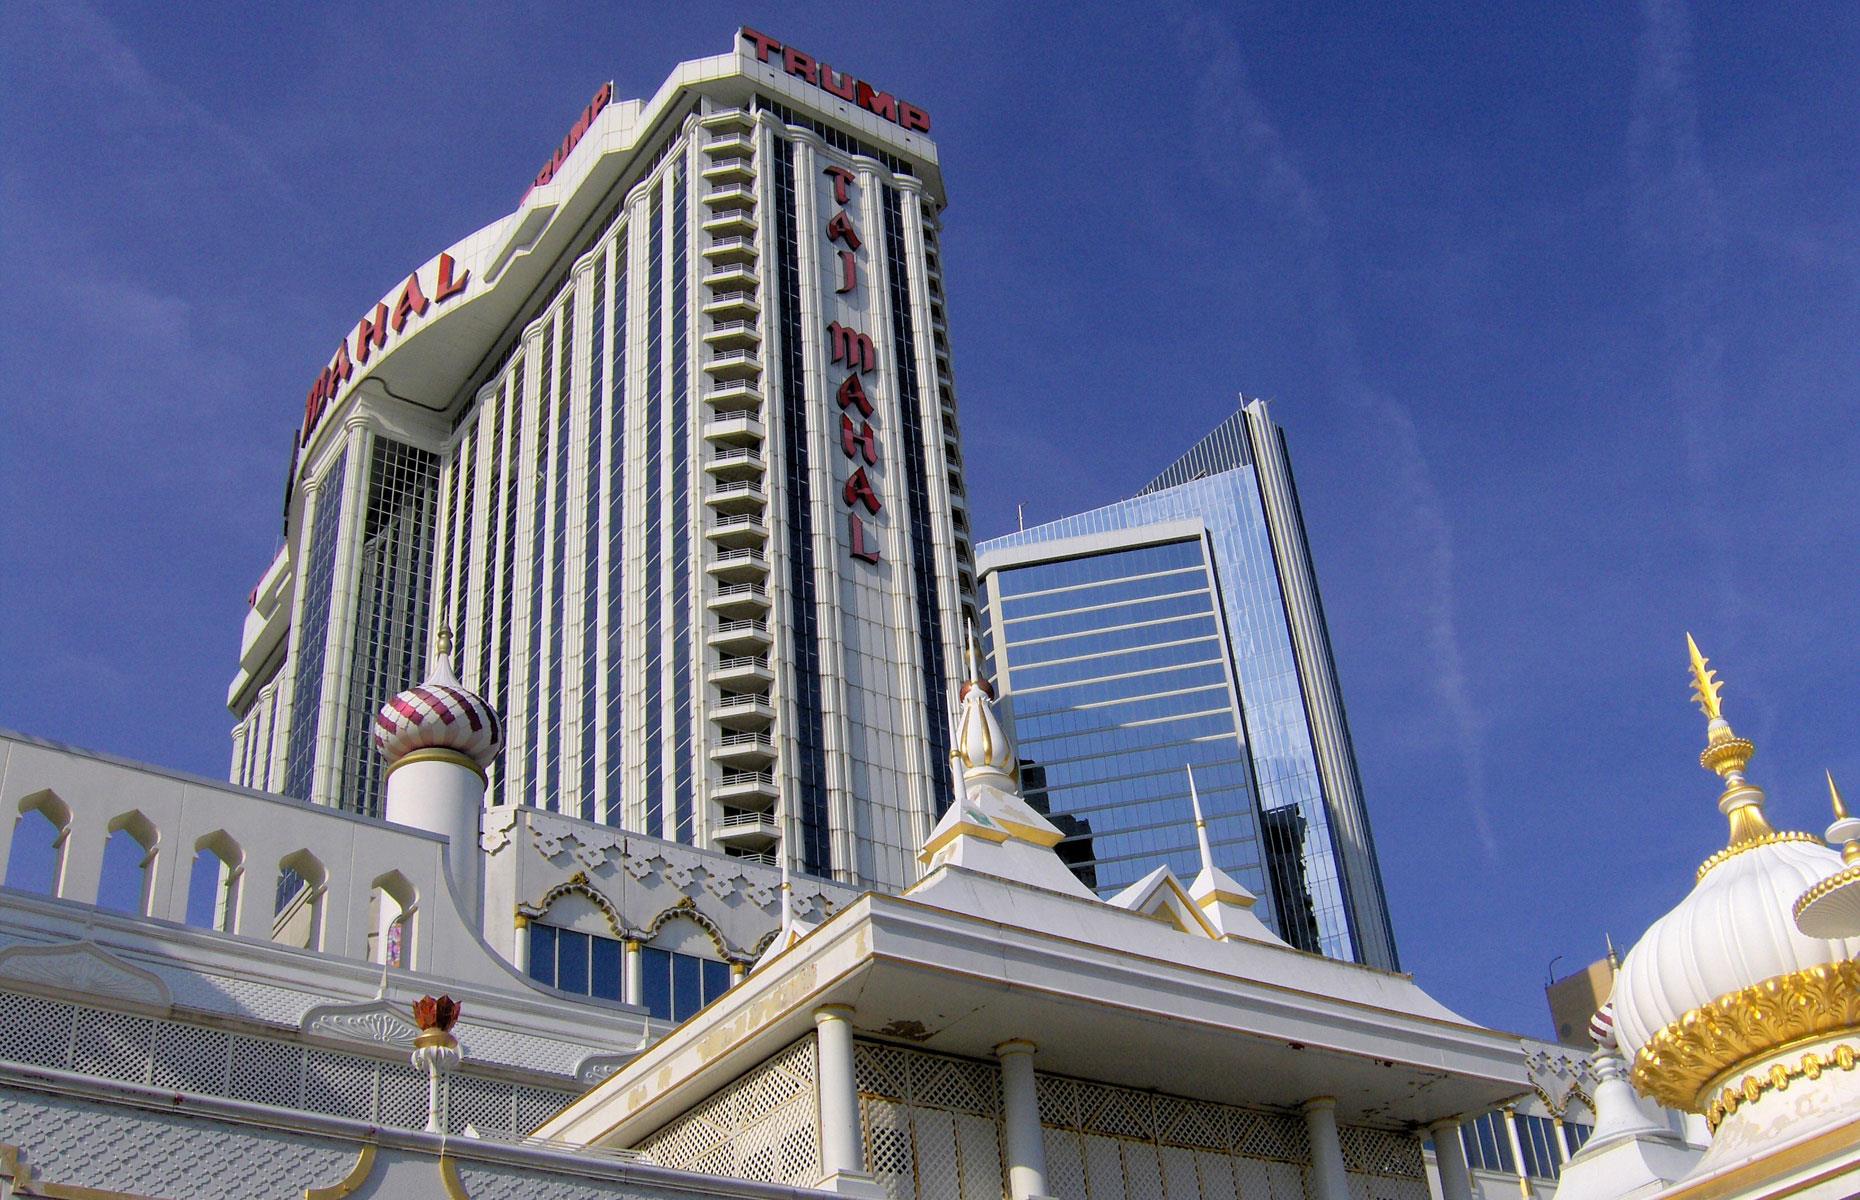 Hard Rock Hotel & Casino, Atlantic City: $2.5 billion (£1.8bn)